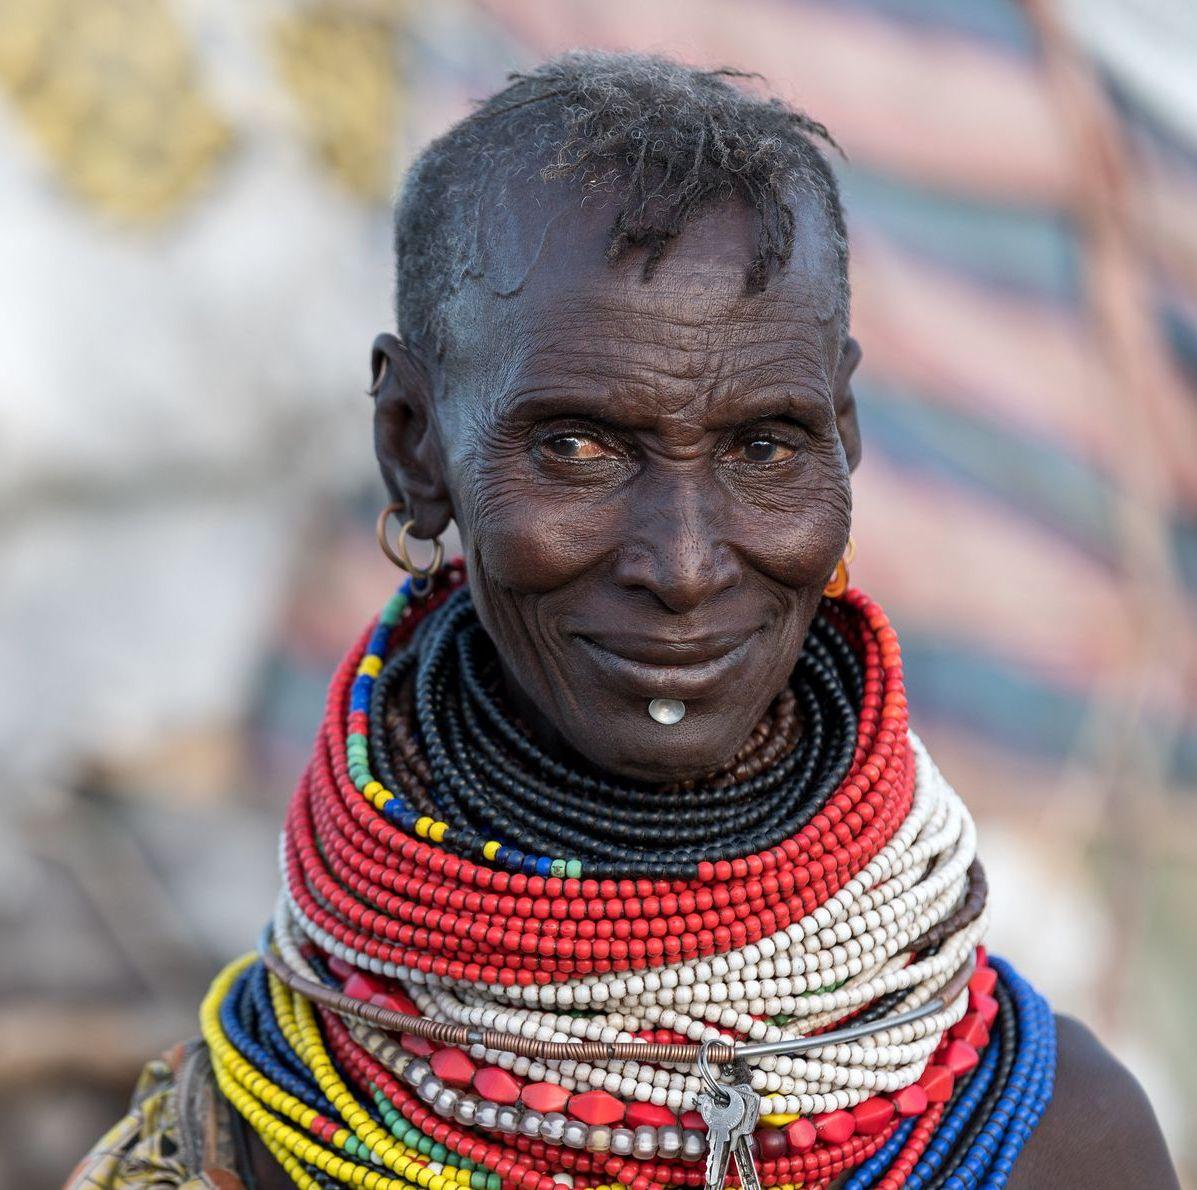 Turkana community elder Lokarach Lomongin